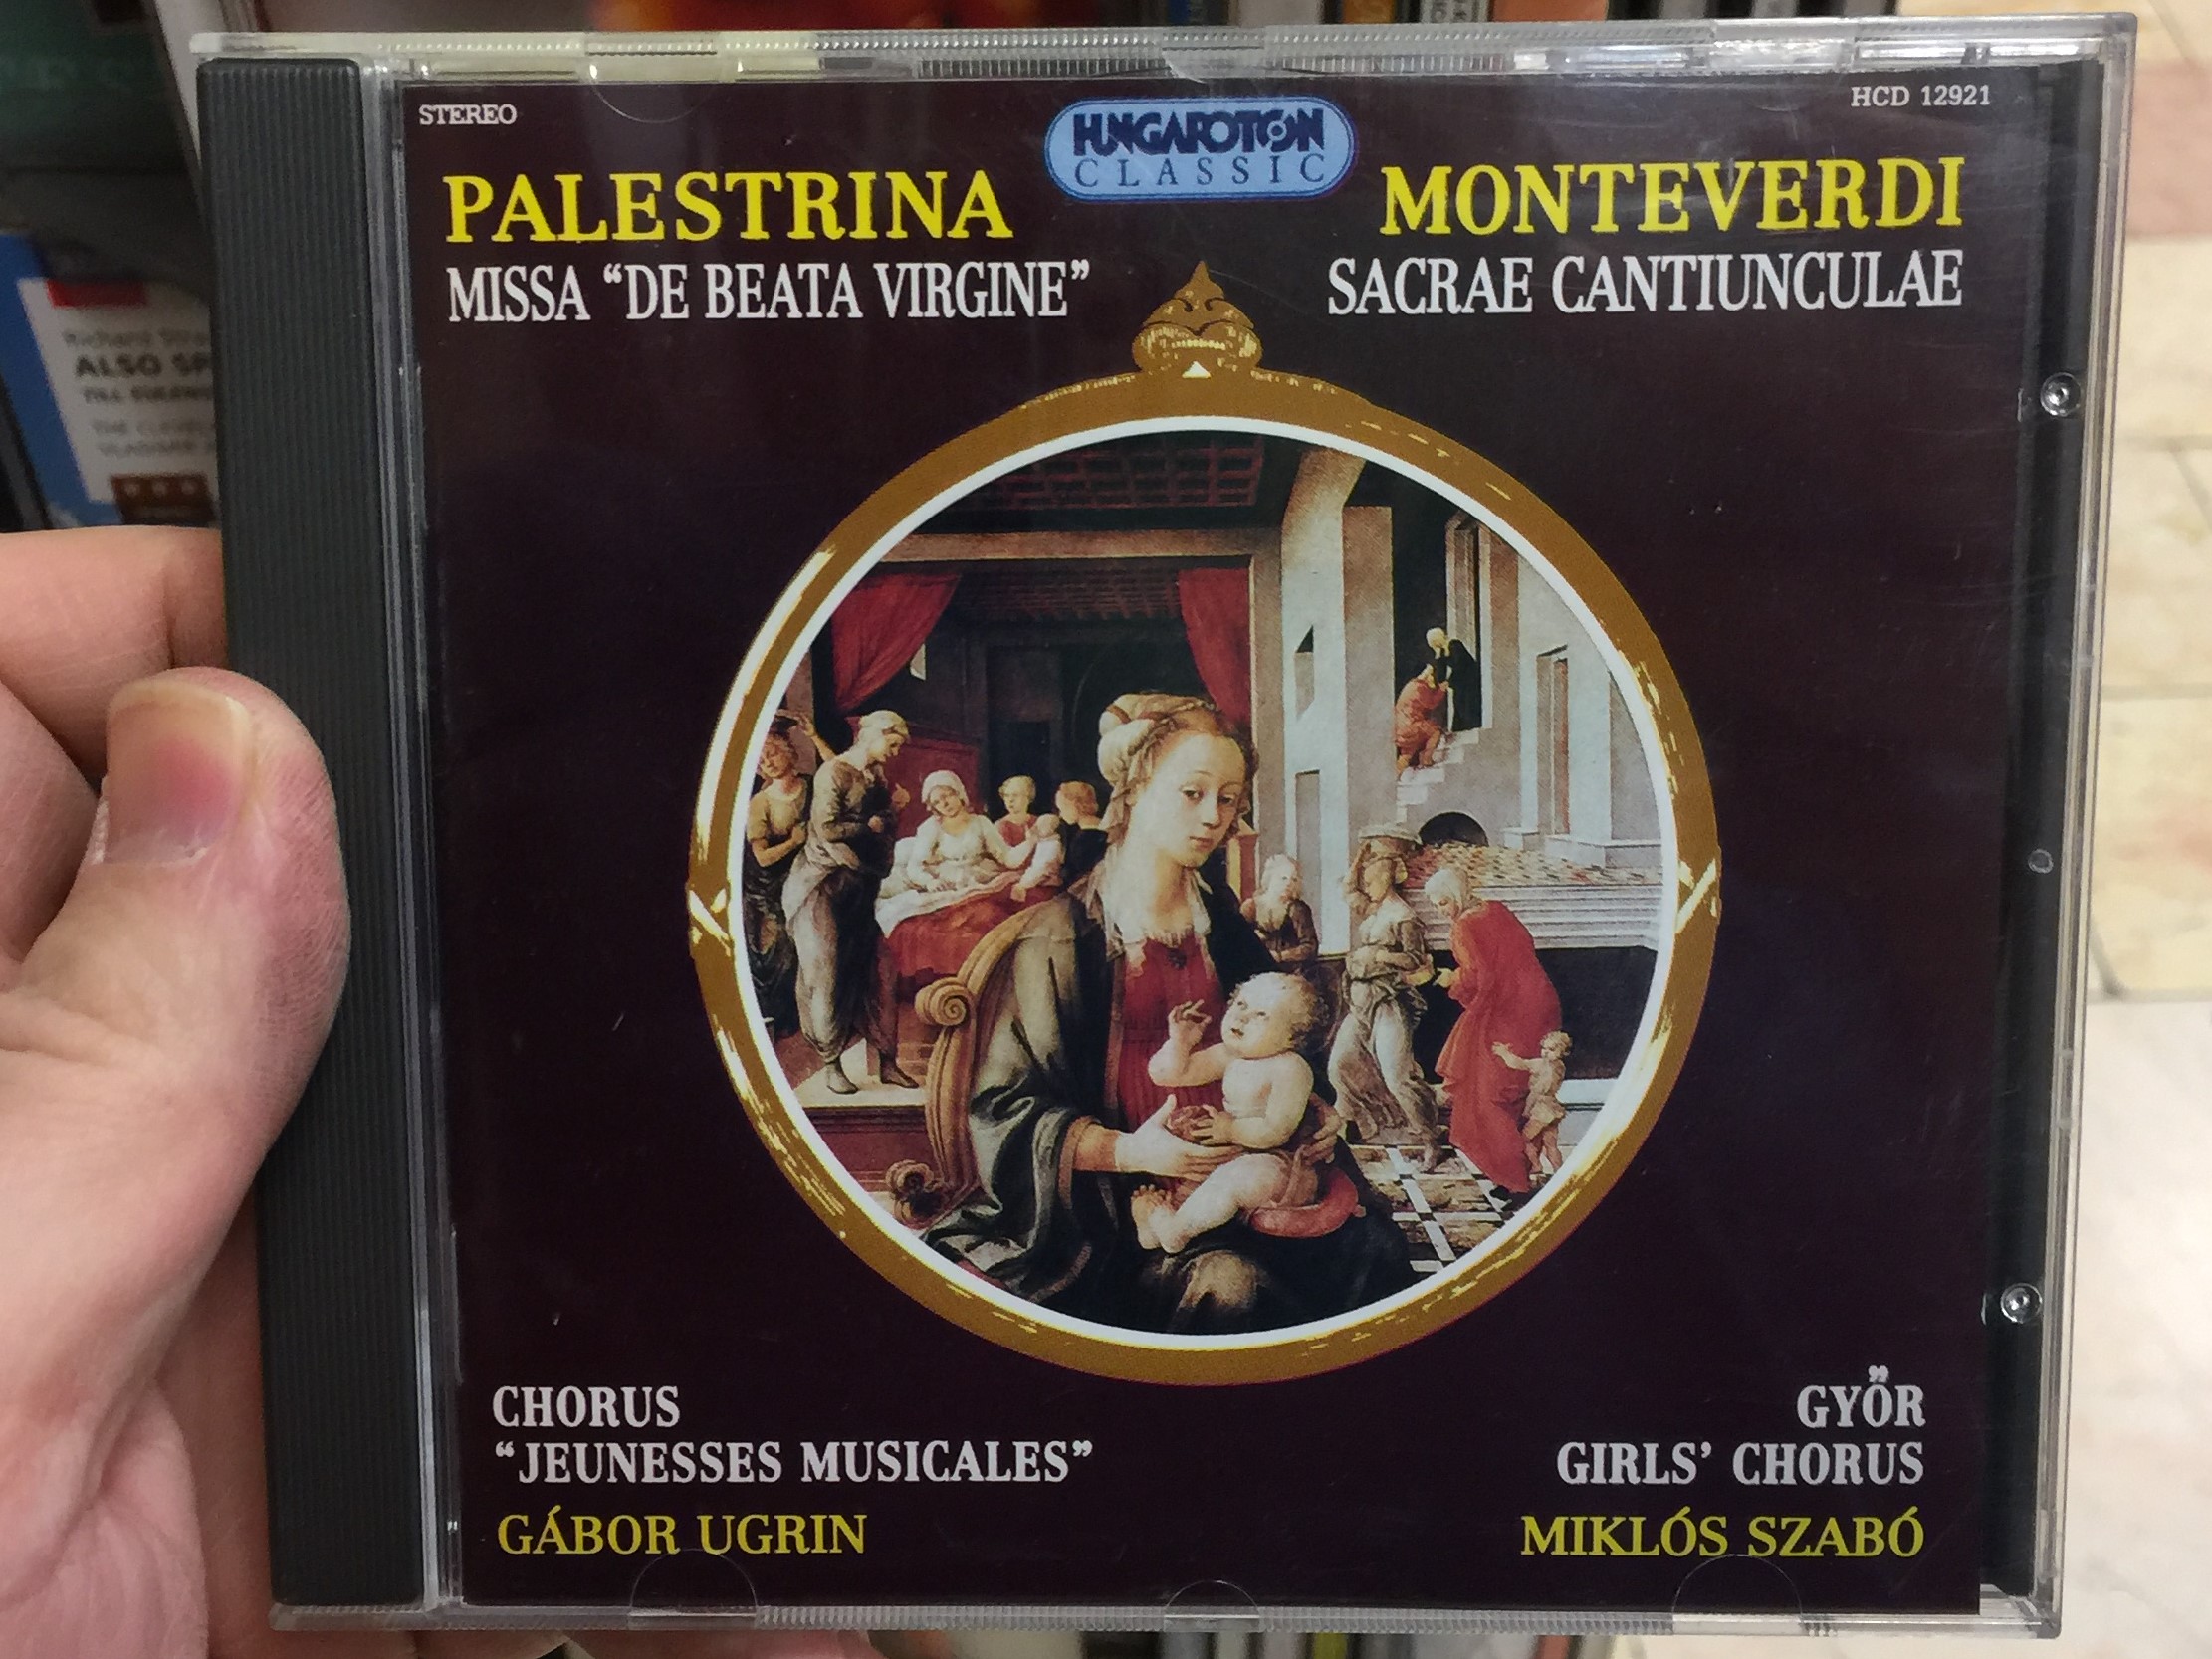 palestrina-missa-de-beata-virgine-monteverdi-sacrae-cantiunculae-chorus-jeunesses-musicales-gabor-ugrin-gyor-girls-chorus-miklos-szabo-hungaroton-classic-audio-cd-1995-stereo-hcd-1-.jpg